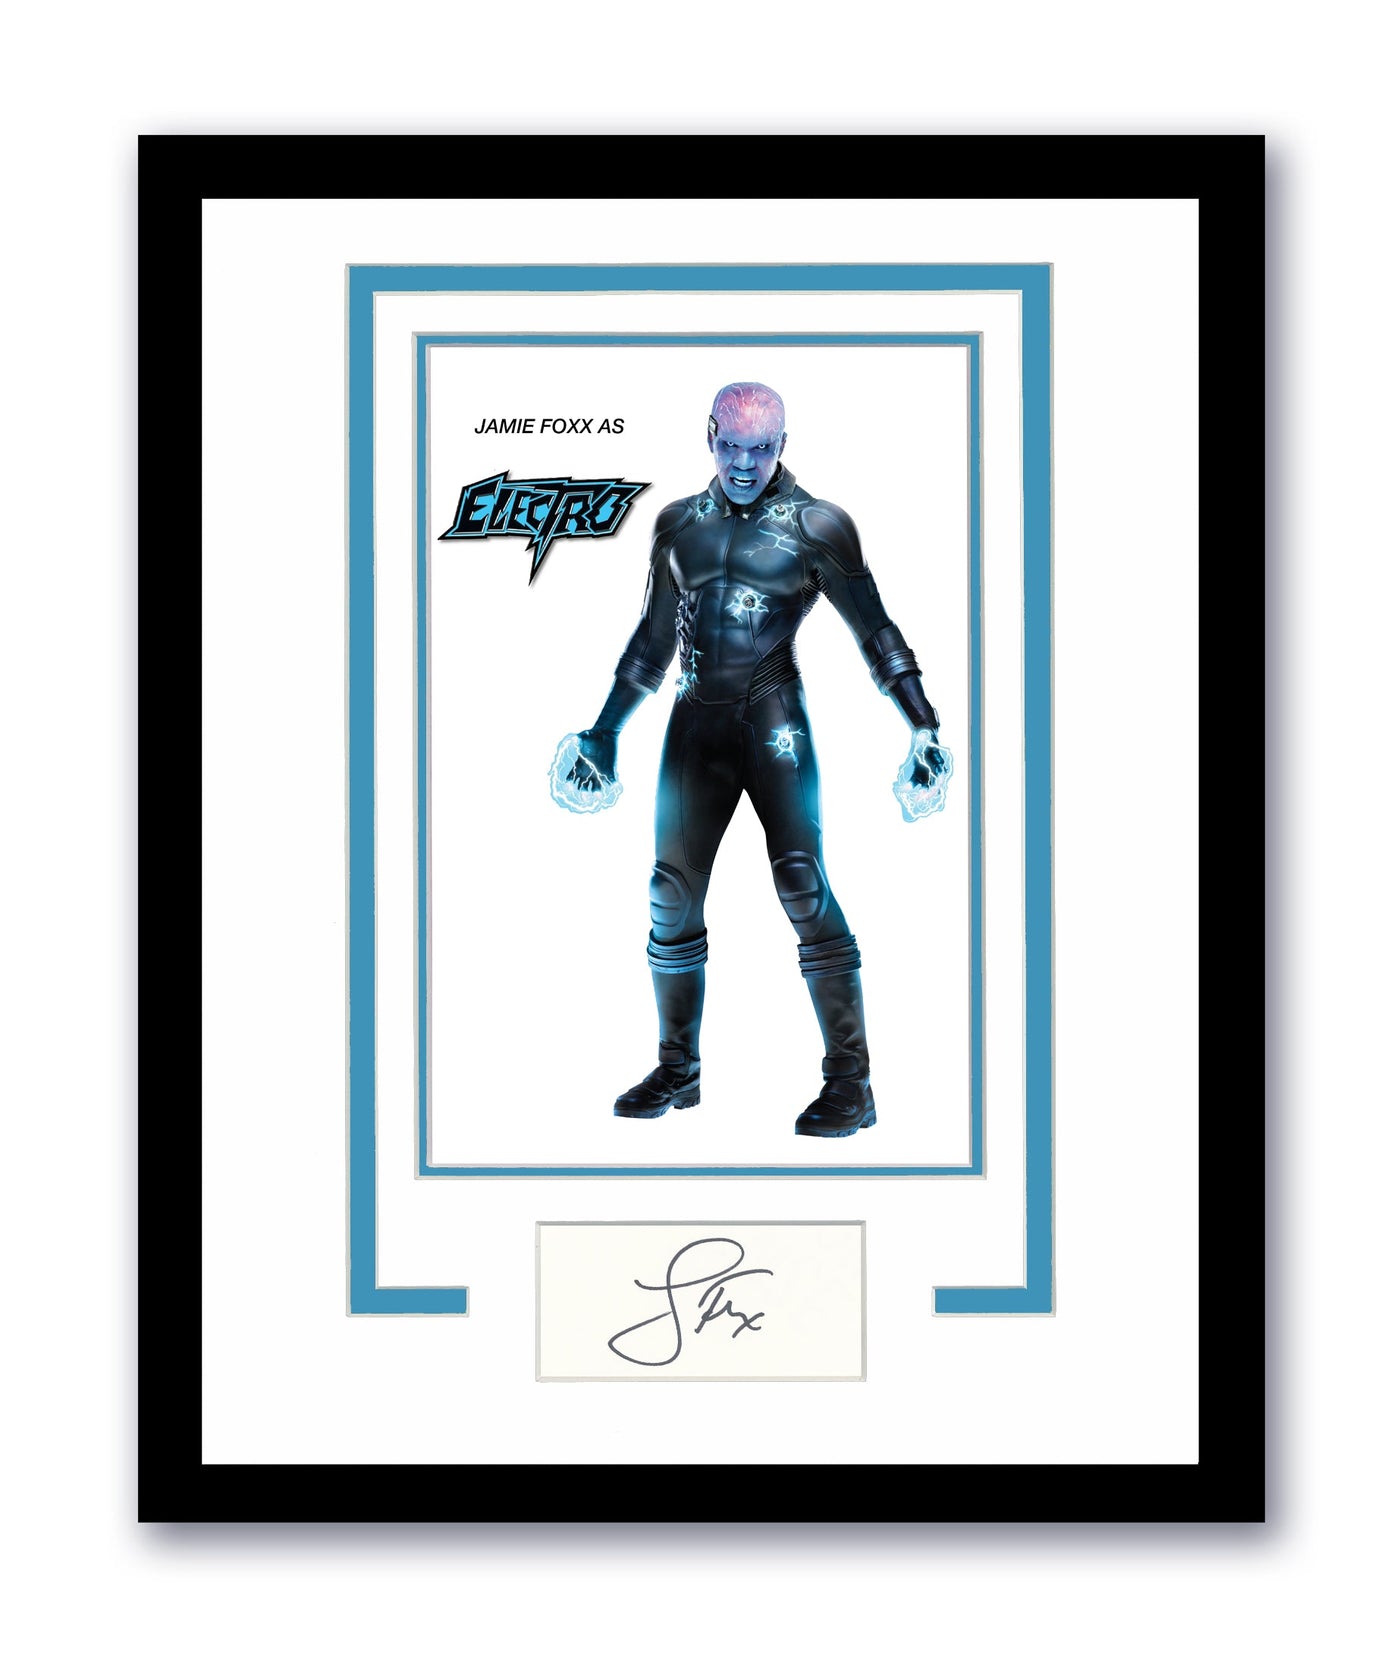 Electro Jamie Foxx Autographed Signed 11x14 Framed Photo Spider-man ACOA